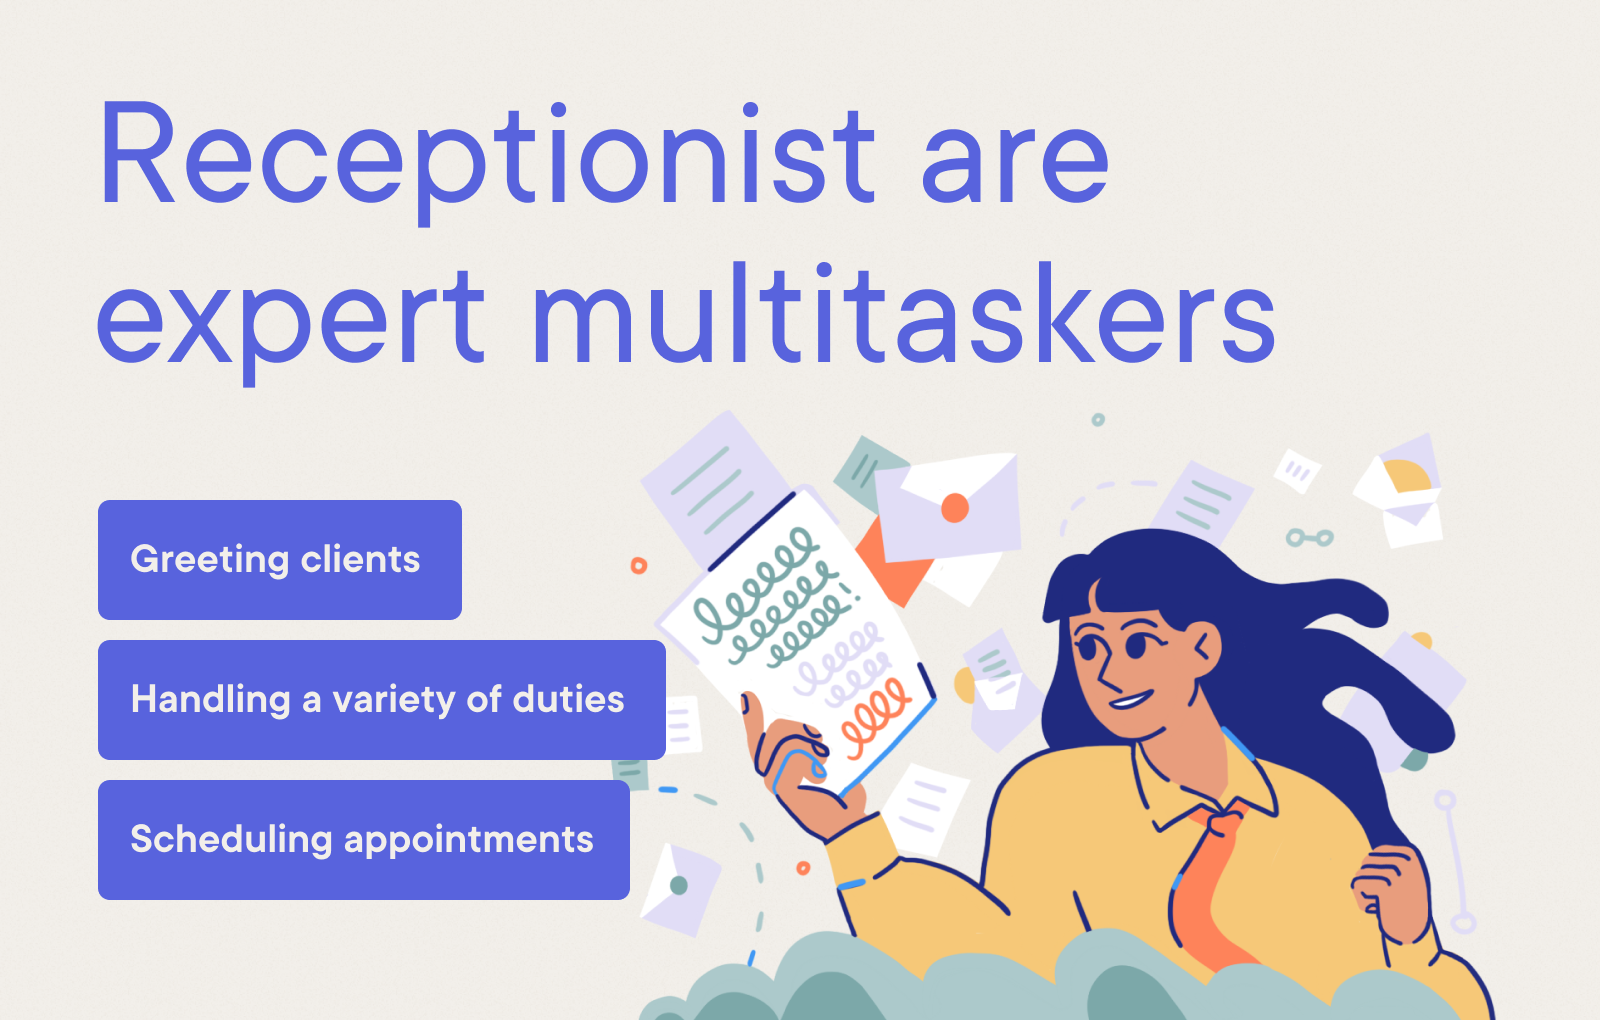 Receptionist Resume Example - Receptionist are expert multitaskers